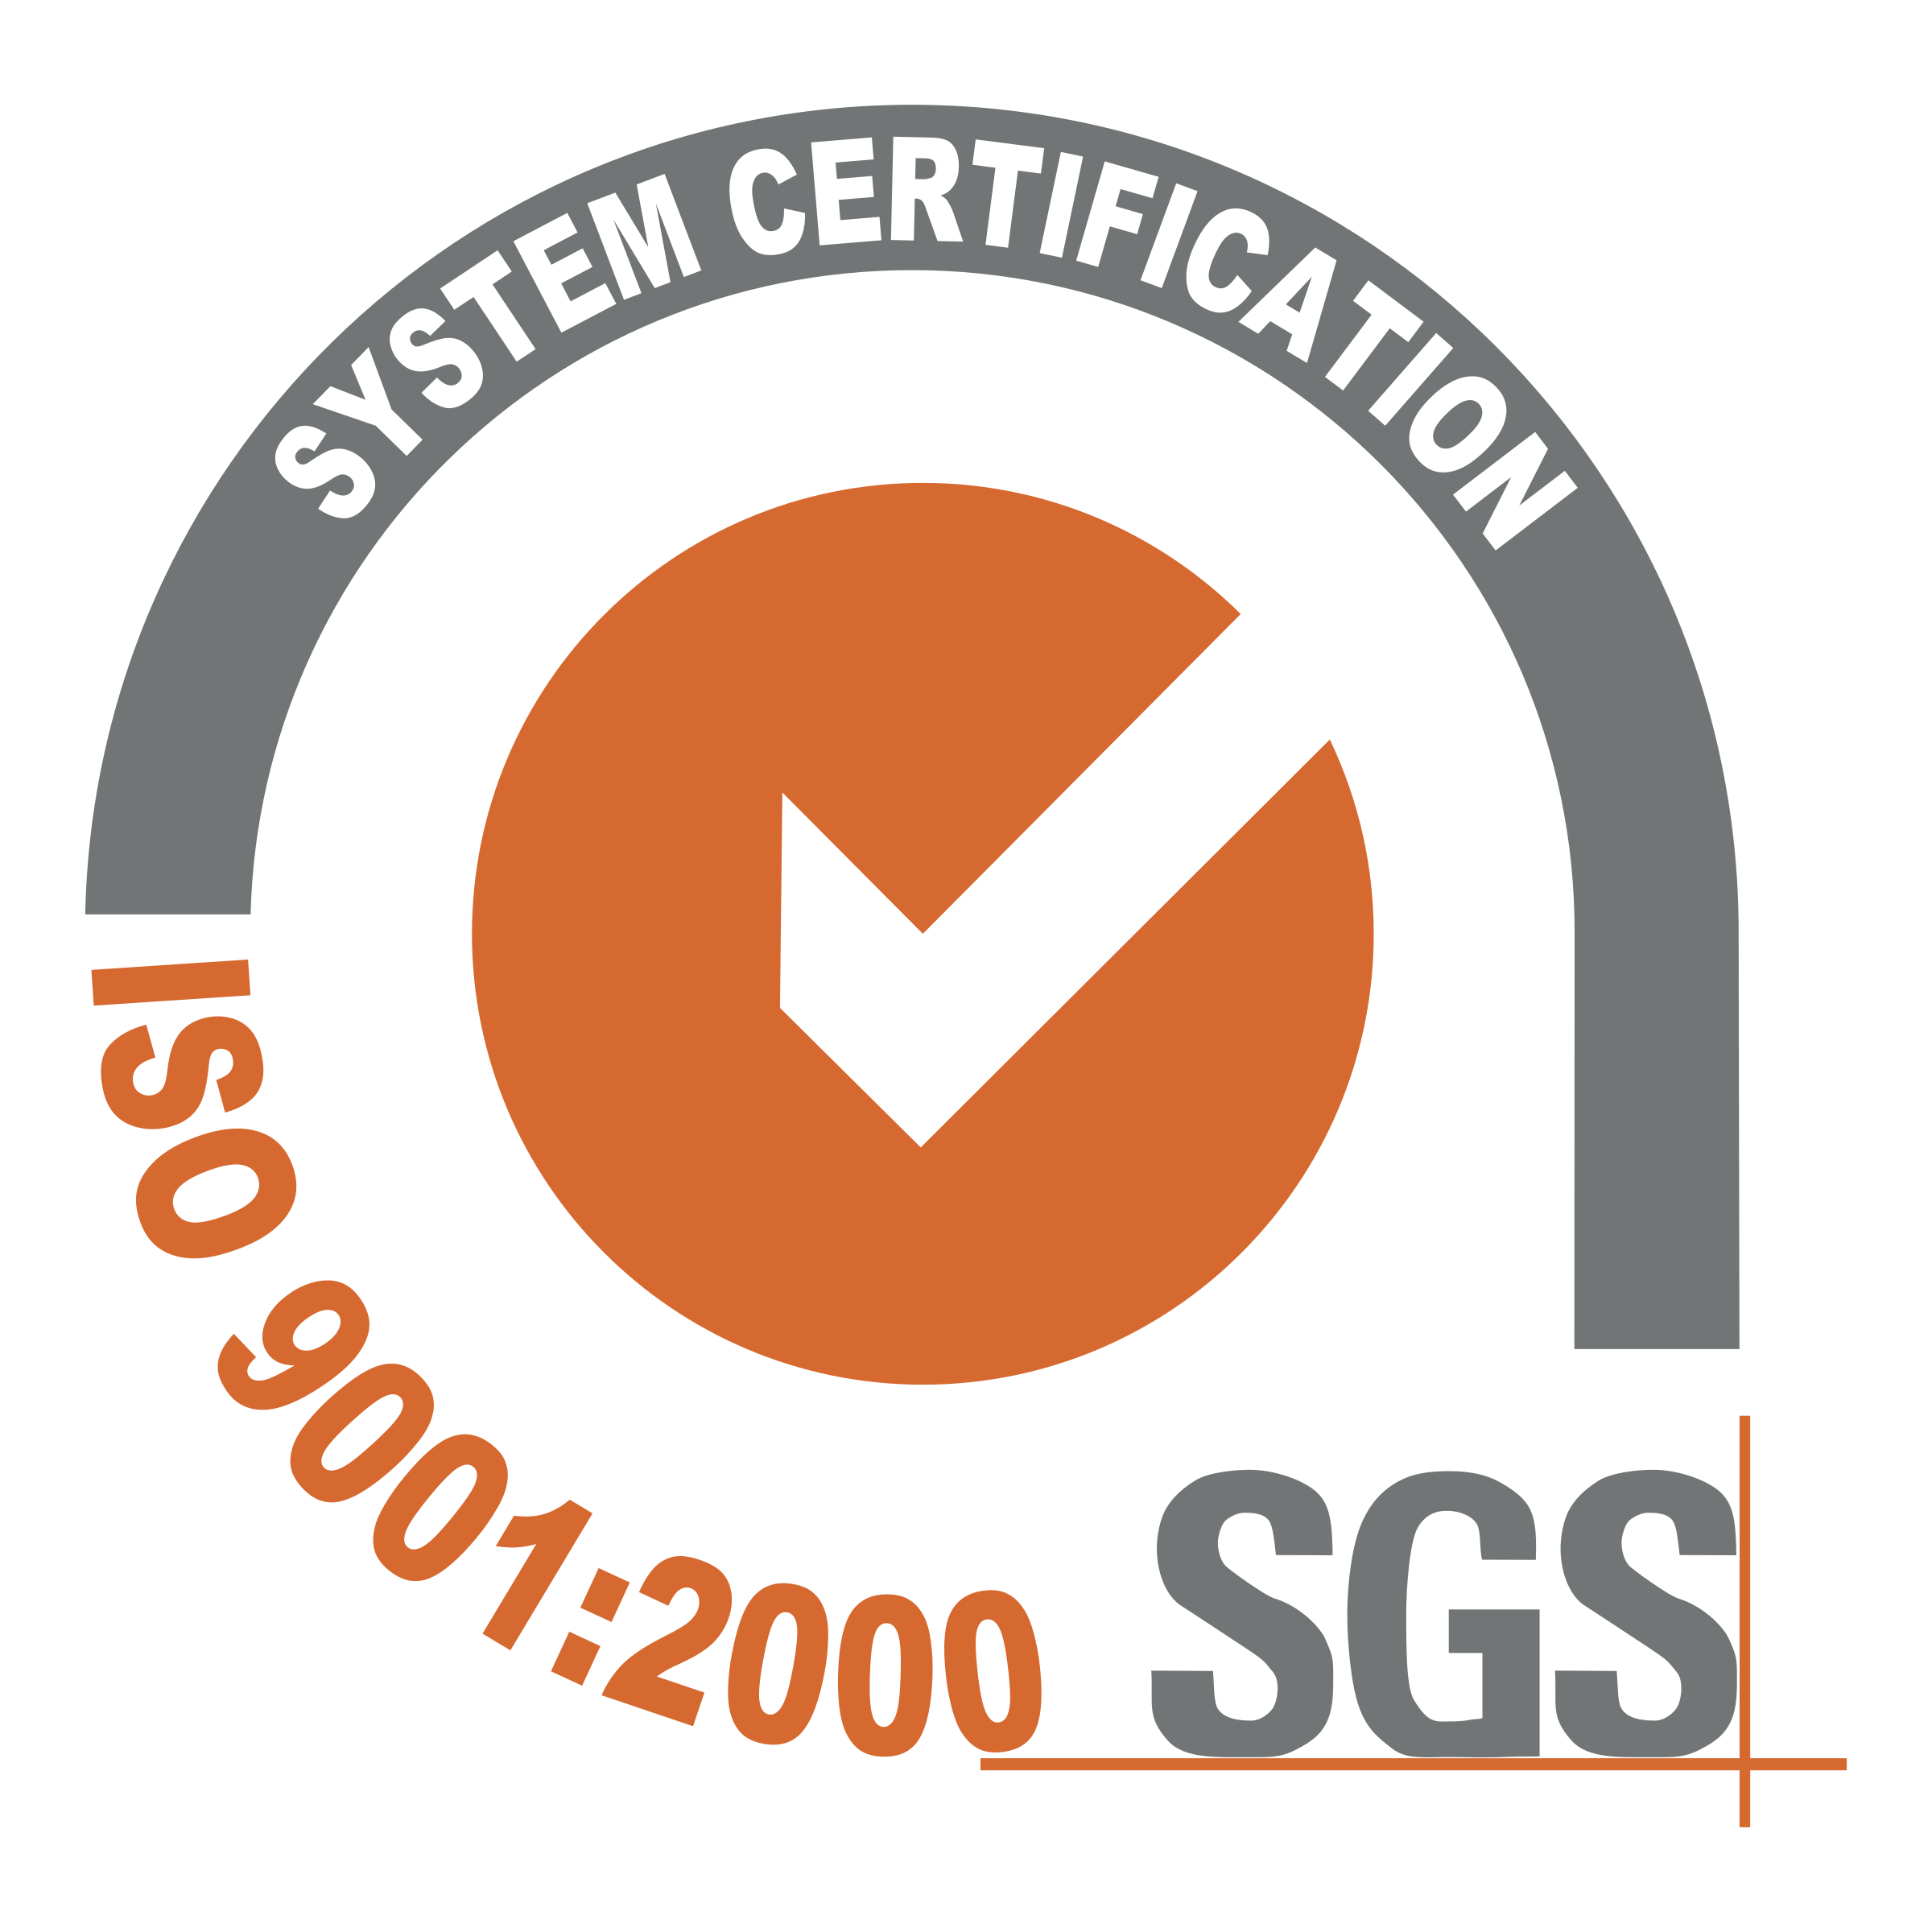 SGS Logo - ISO 9001 2000 SGS Logo PNG Transparent & SVG Vector - Freebie Supply